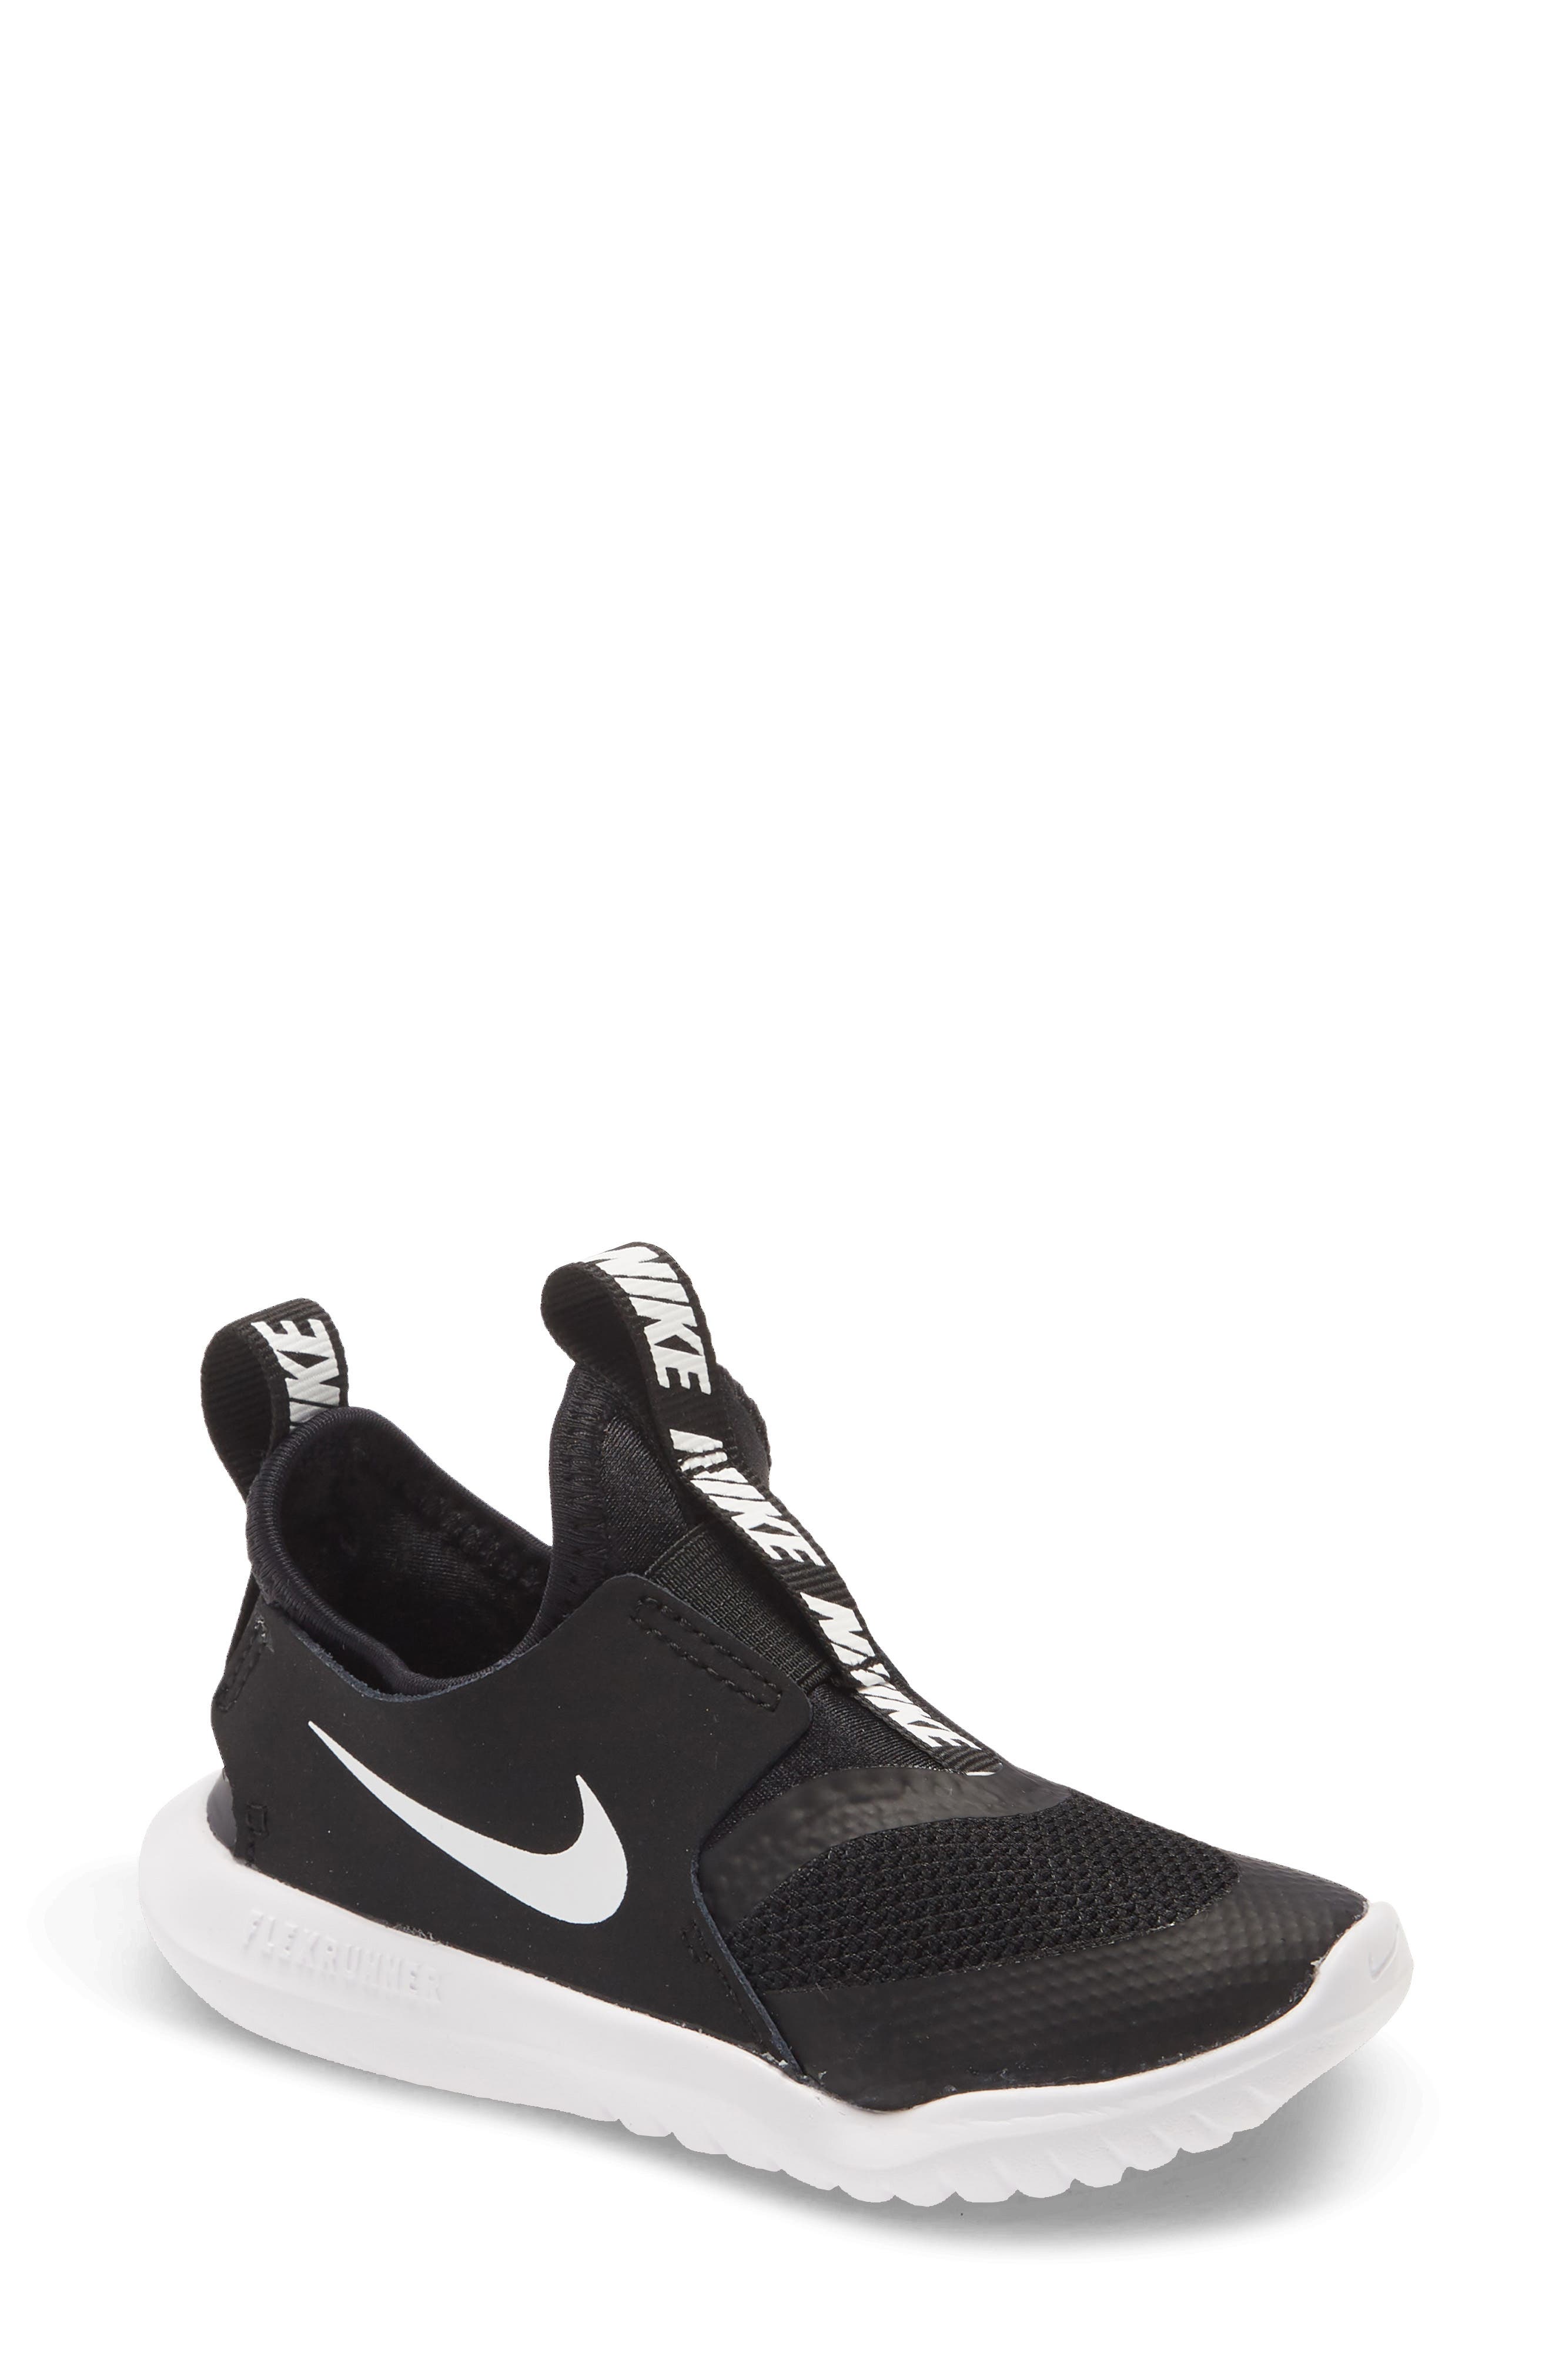 Nike | Future Flex PSV Sneaker | HauteLook